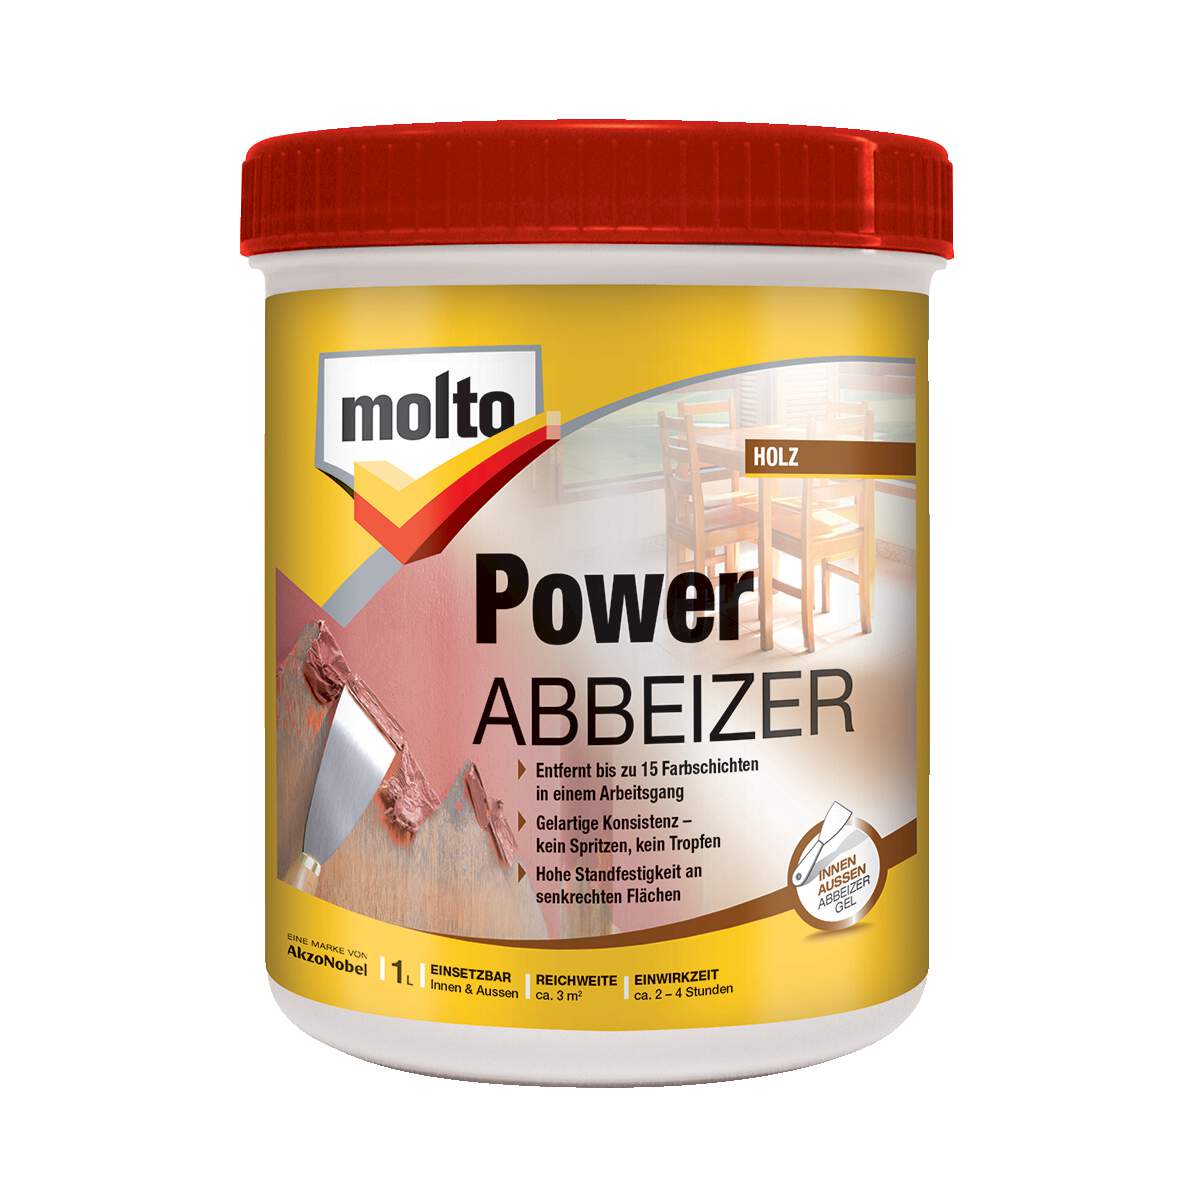 1221680 - Abbeizer Power